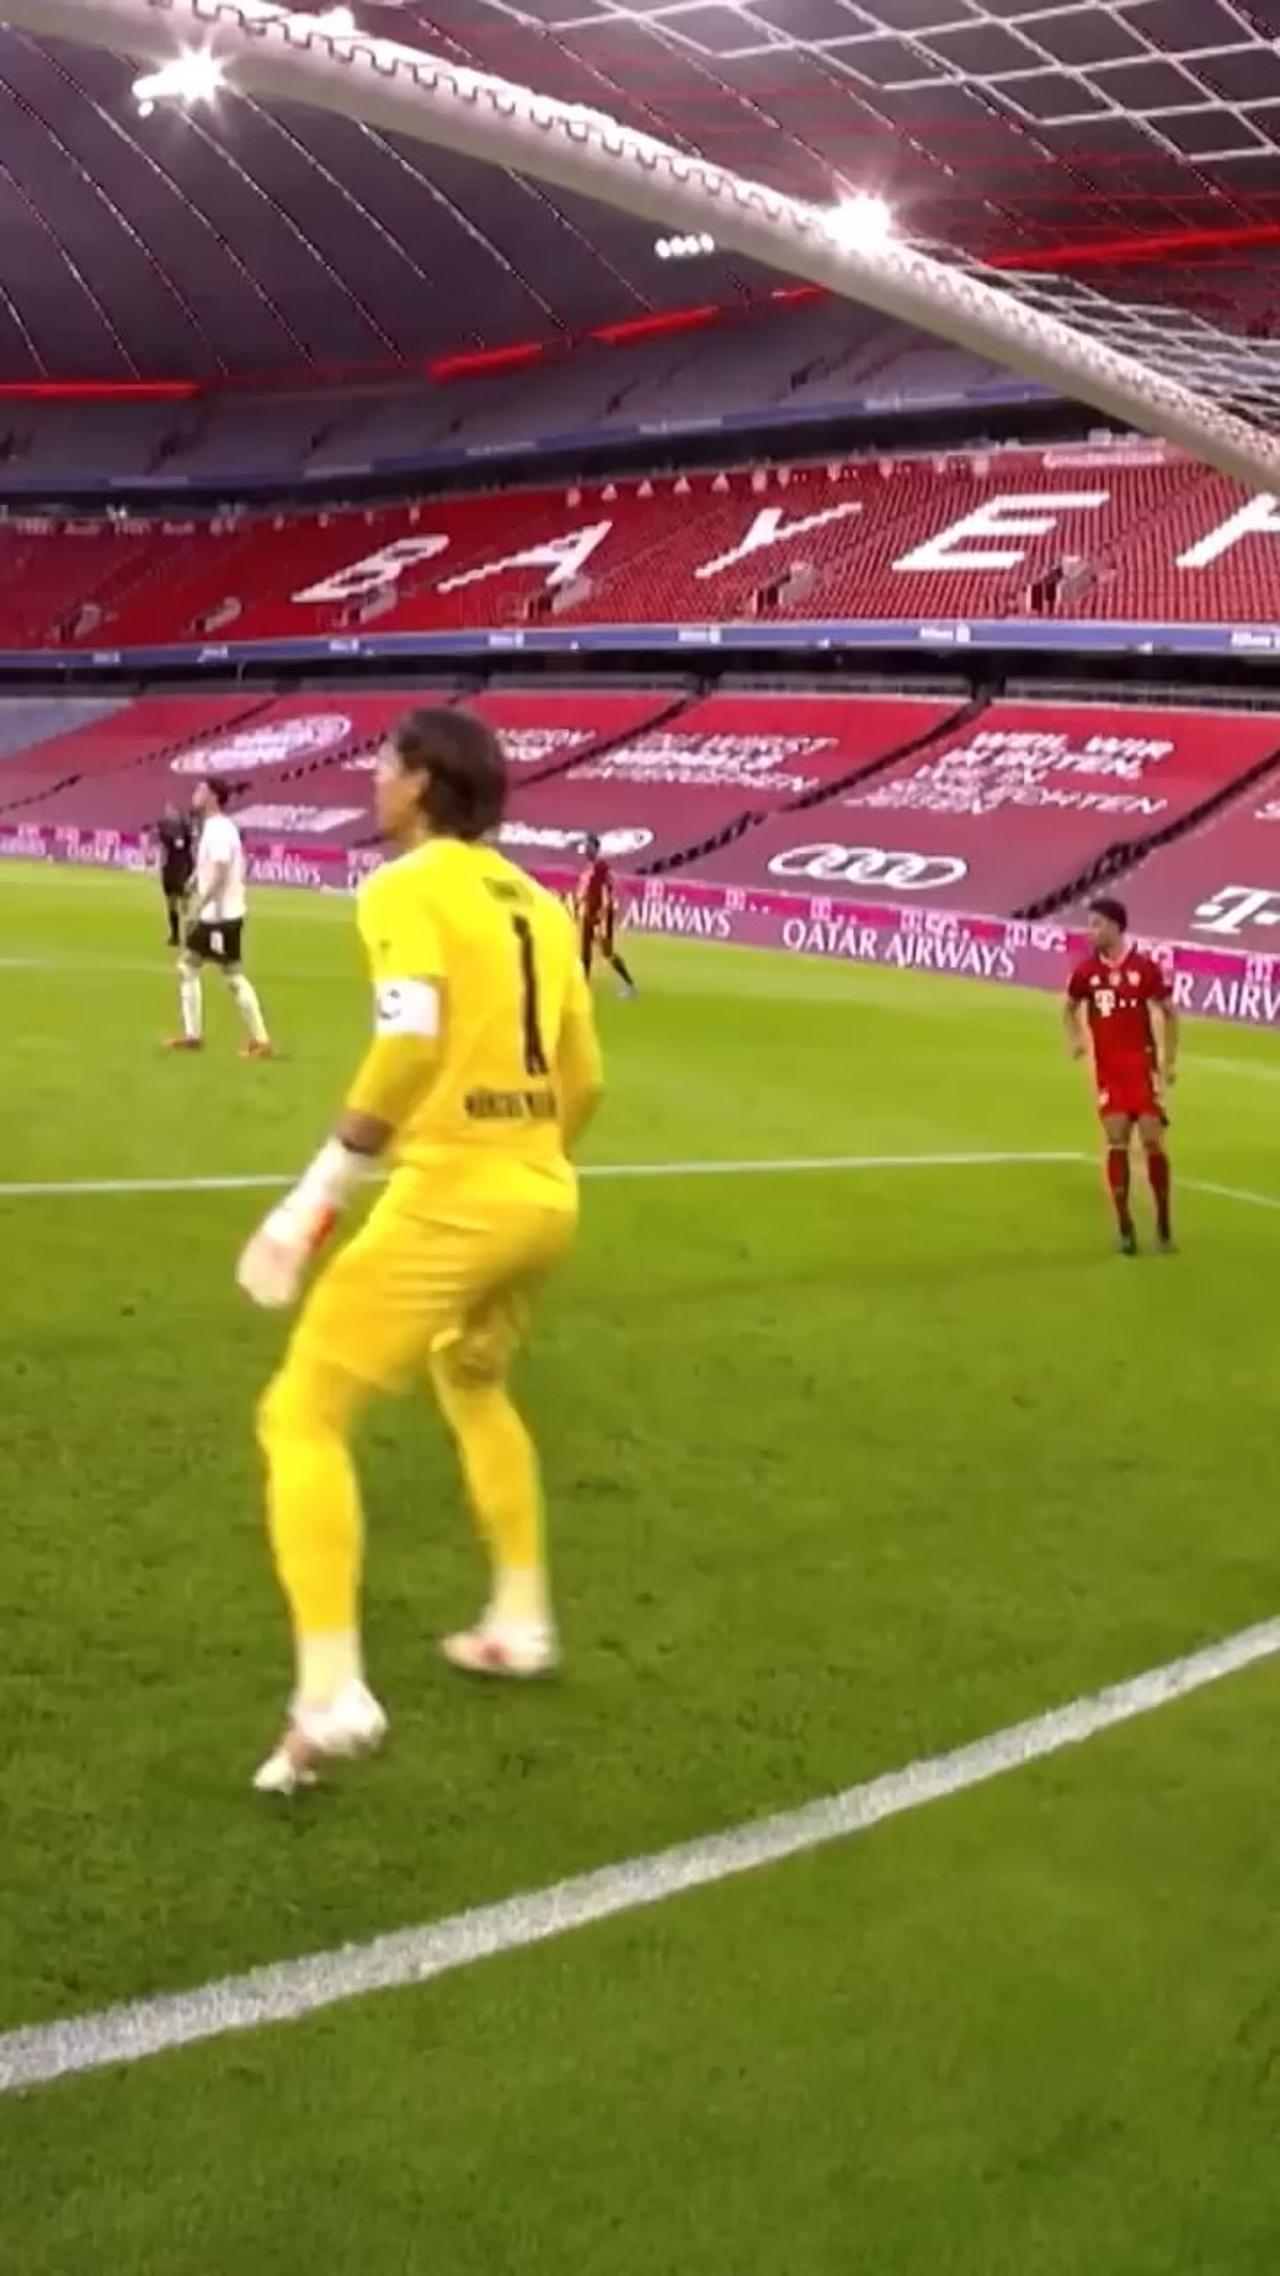 Yann Sommer vs FC Bayern no goal chance (short video)